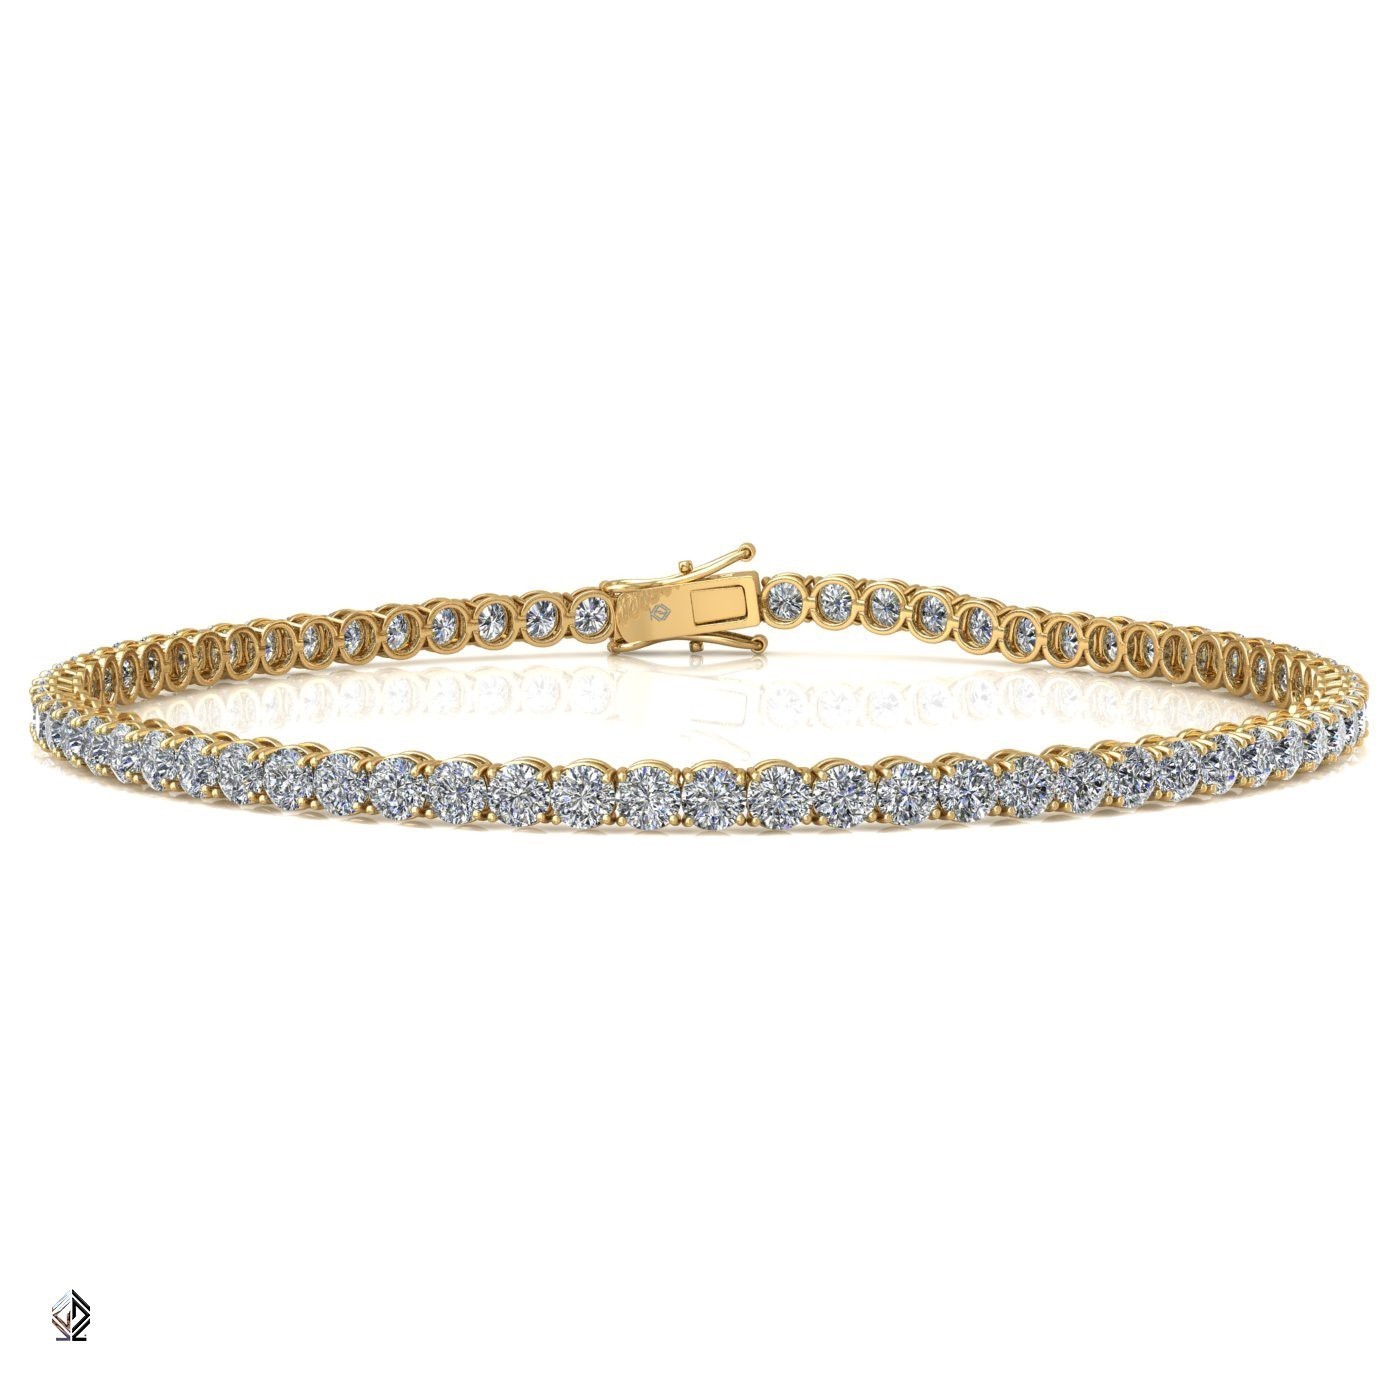 18k yellow gold 2.0mm 4 prong round shape diamond tennis bracelet in round setting